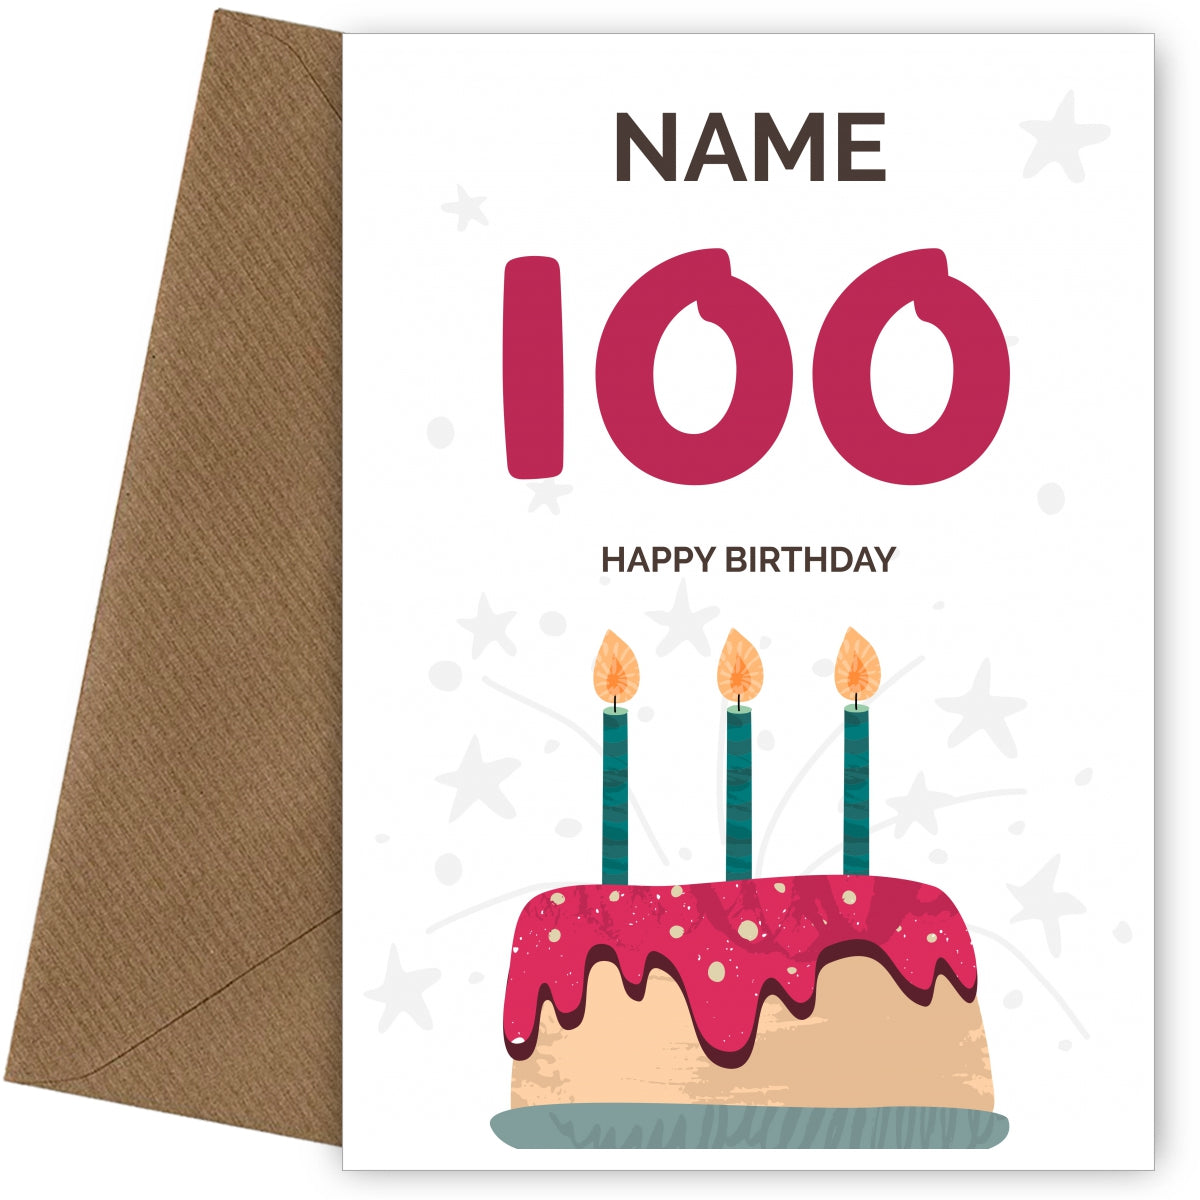 Happy 100th Birthday Card - Fun Birthday Cake Design